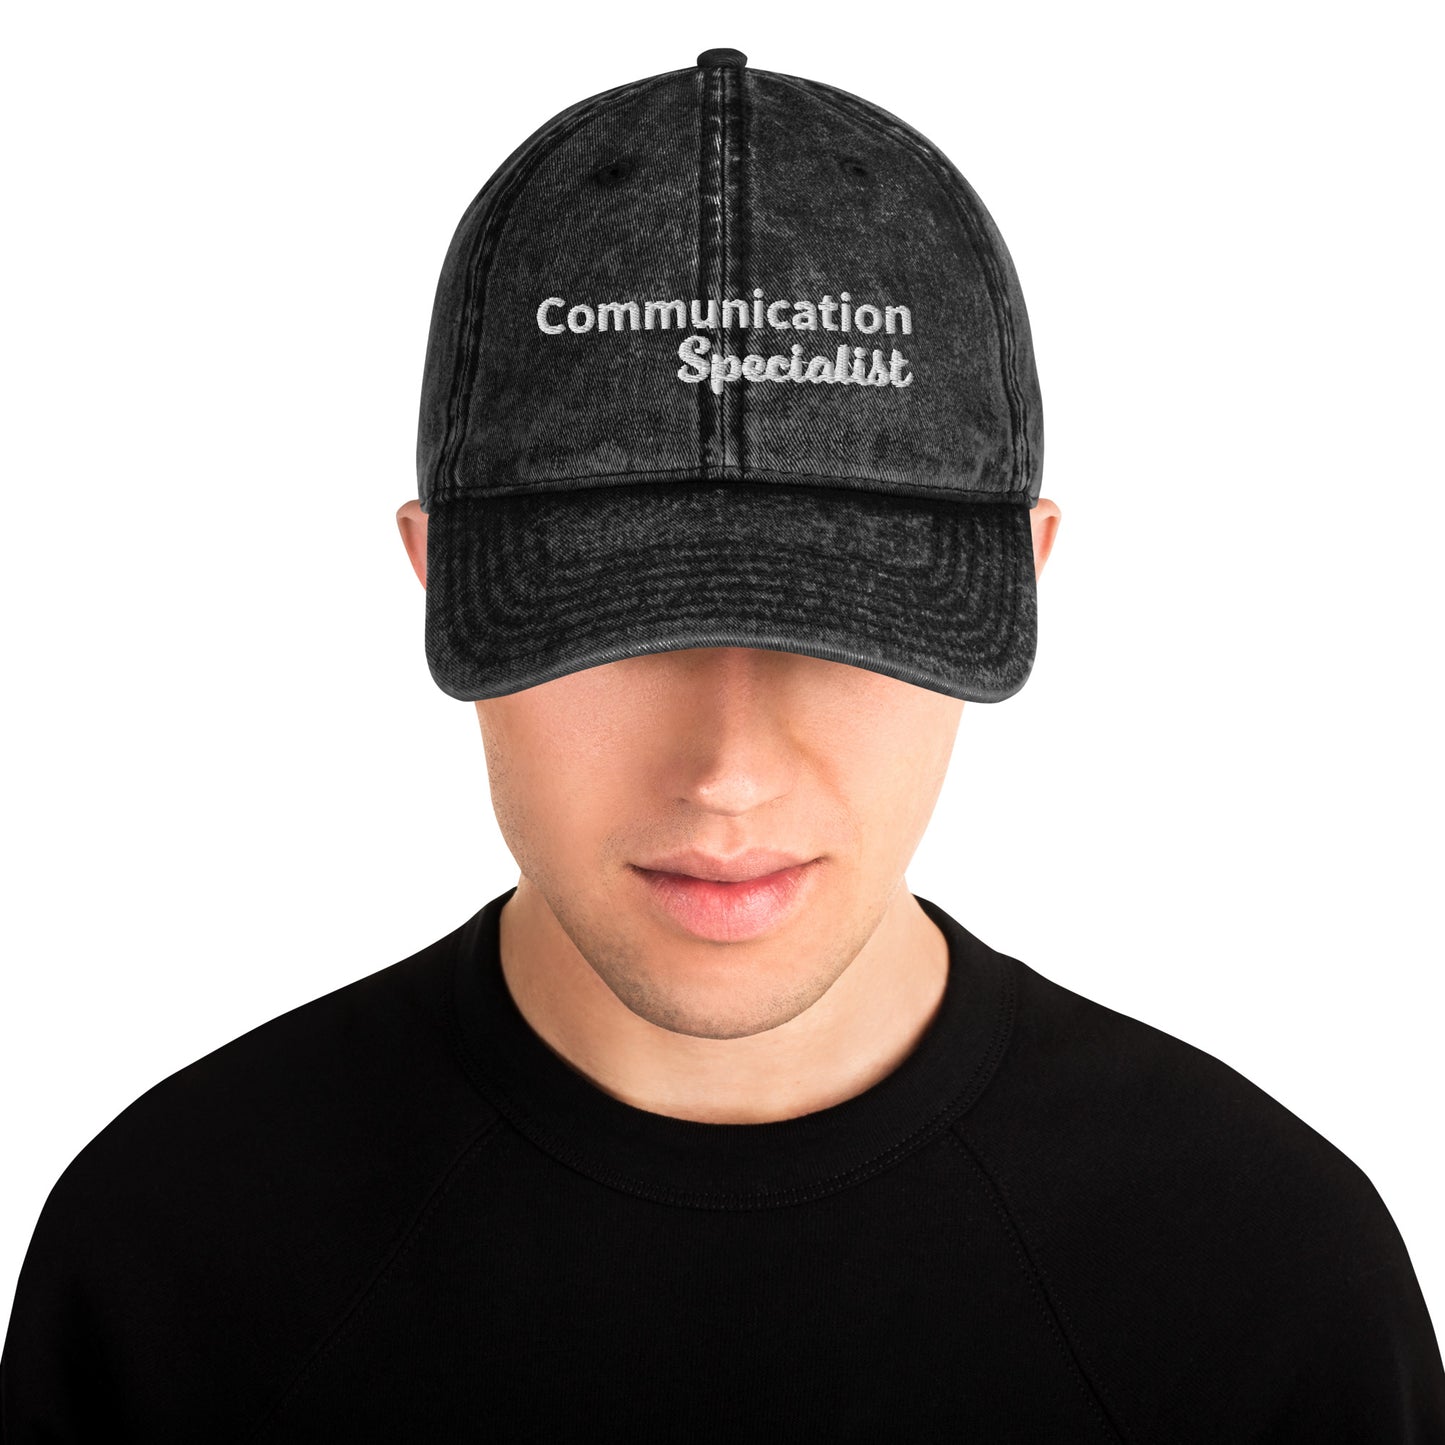 "Communication Specialist" Vintage Cotton Twill Cap